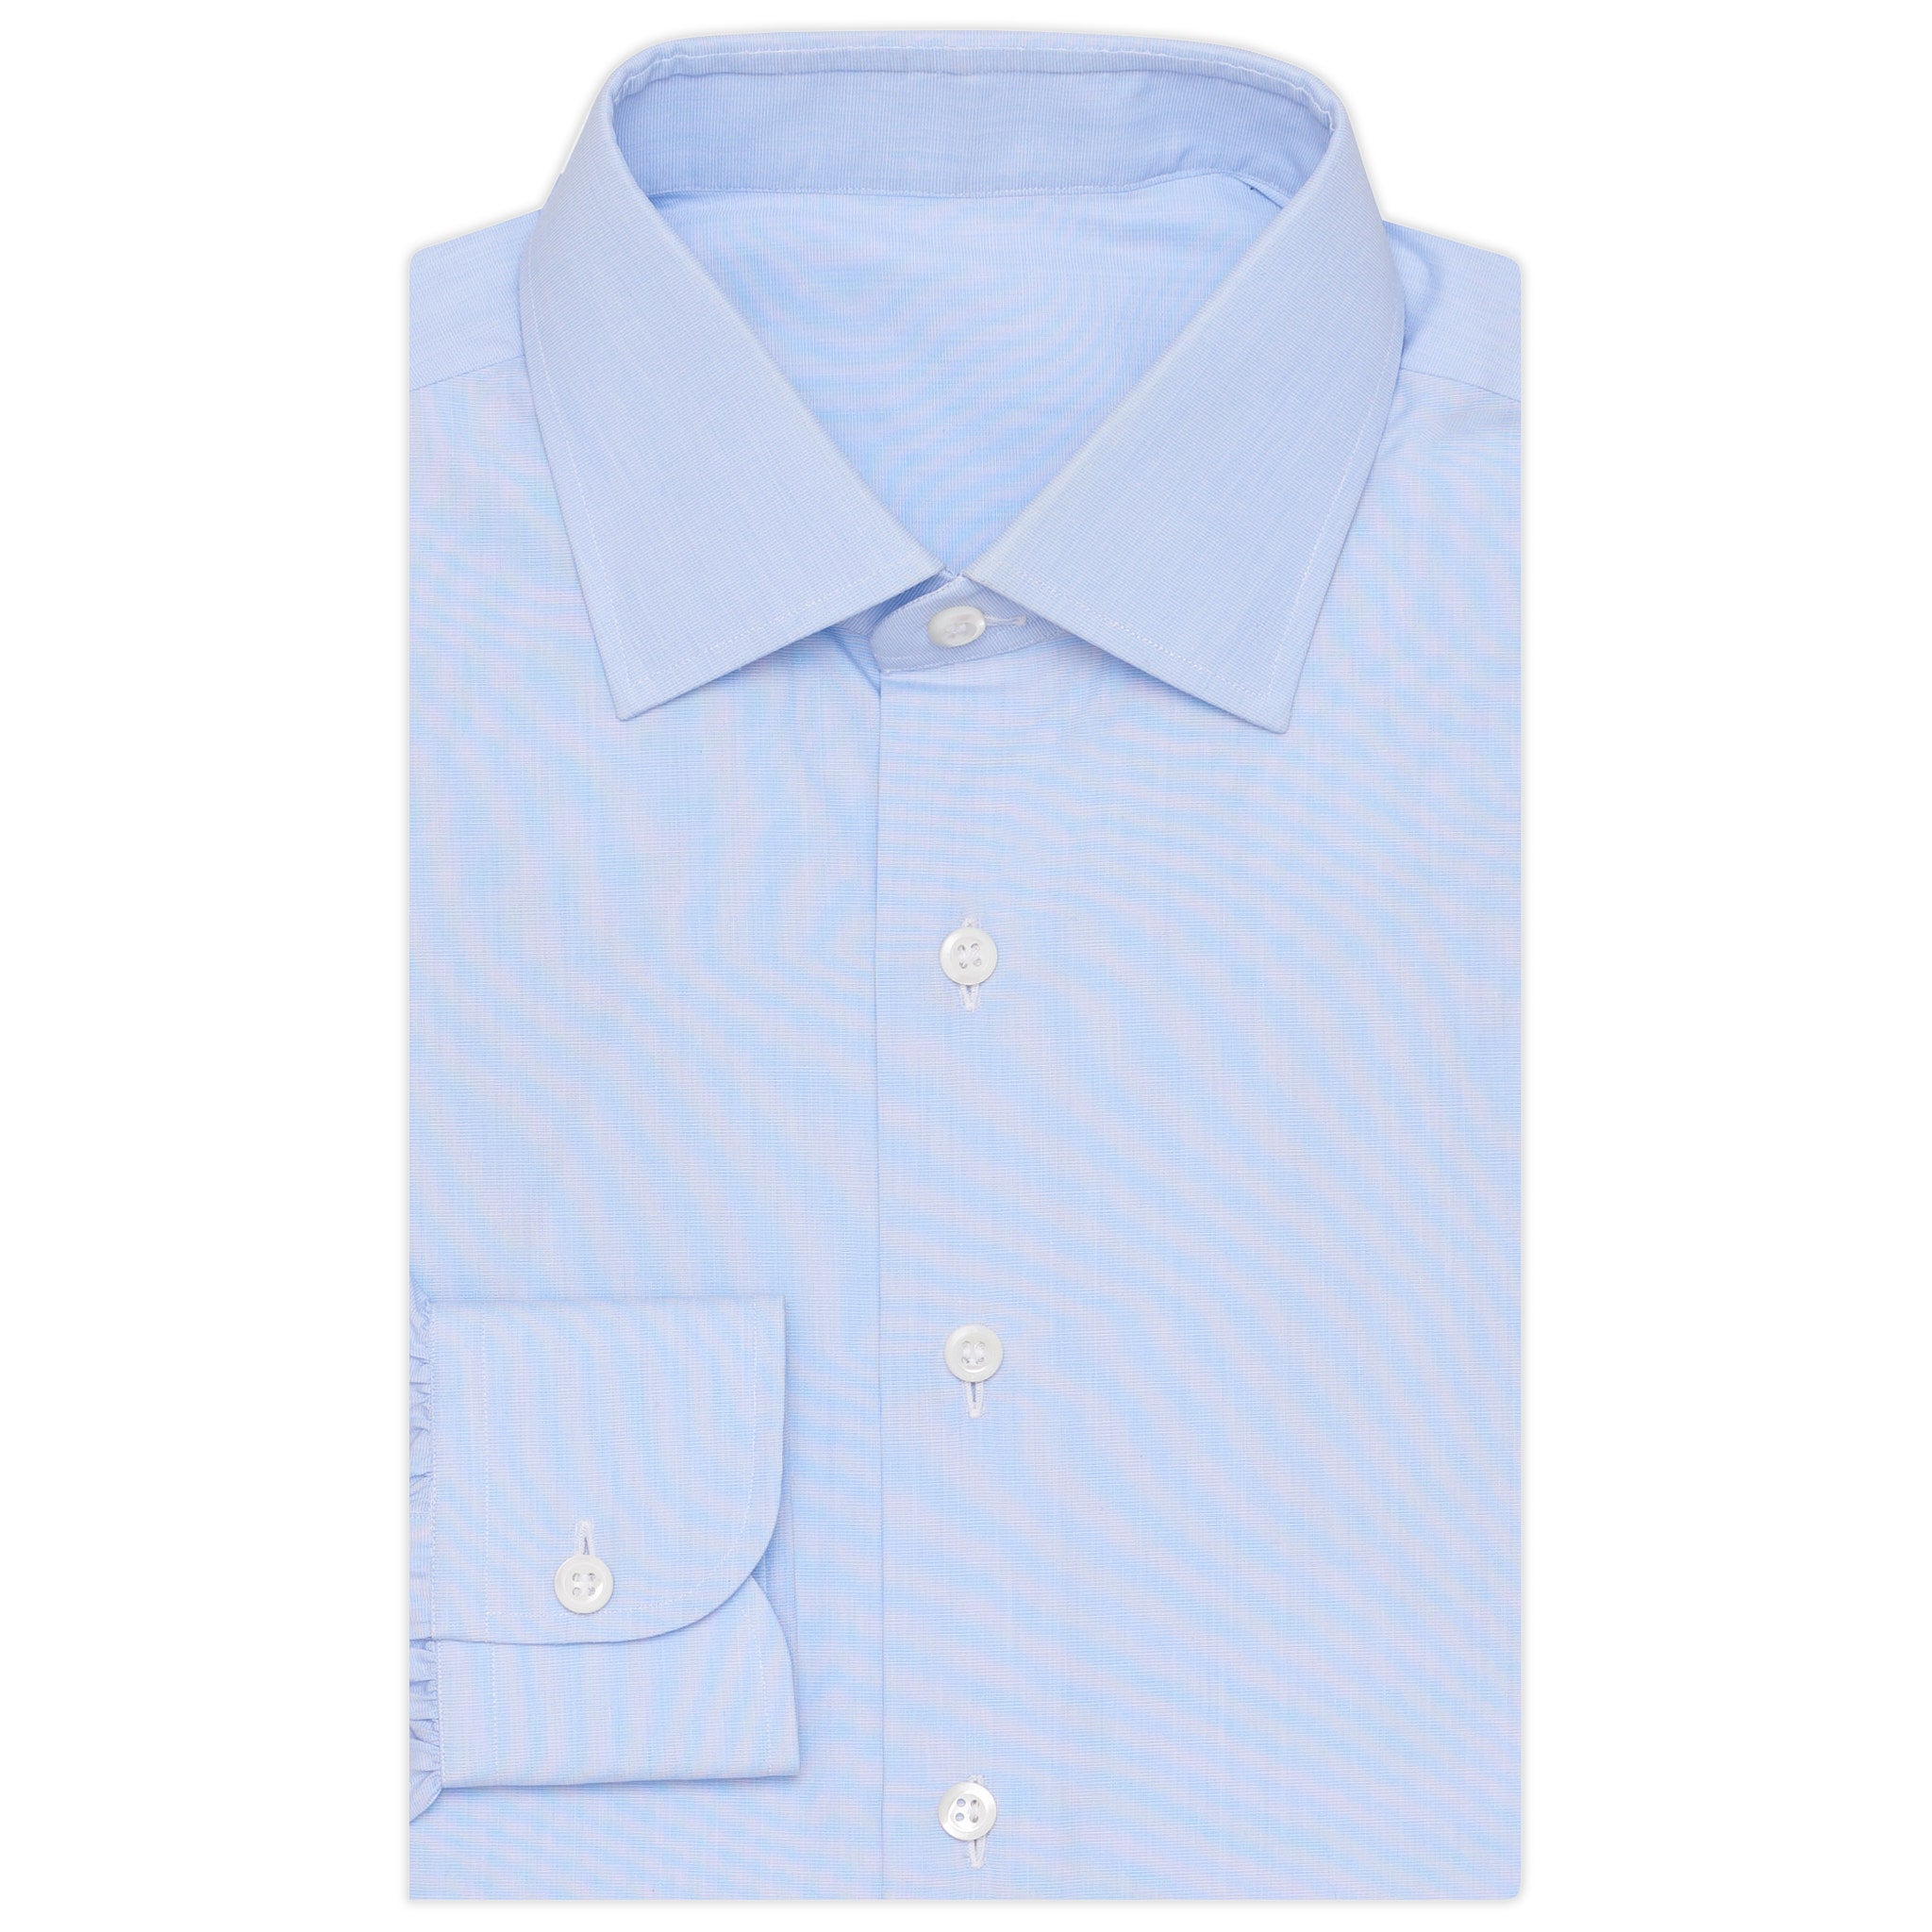 BESPOKE ATHENS Handmade Blue End-on-End Cotton Spalla Camicia Dress Shirt NEW